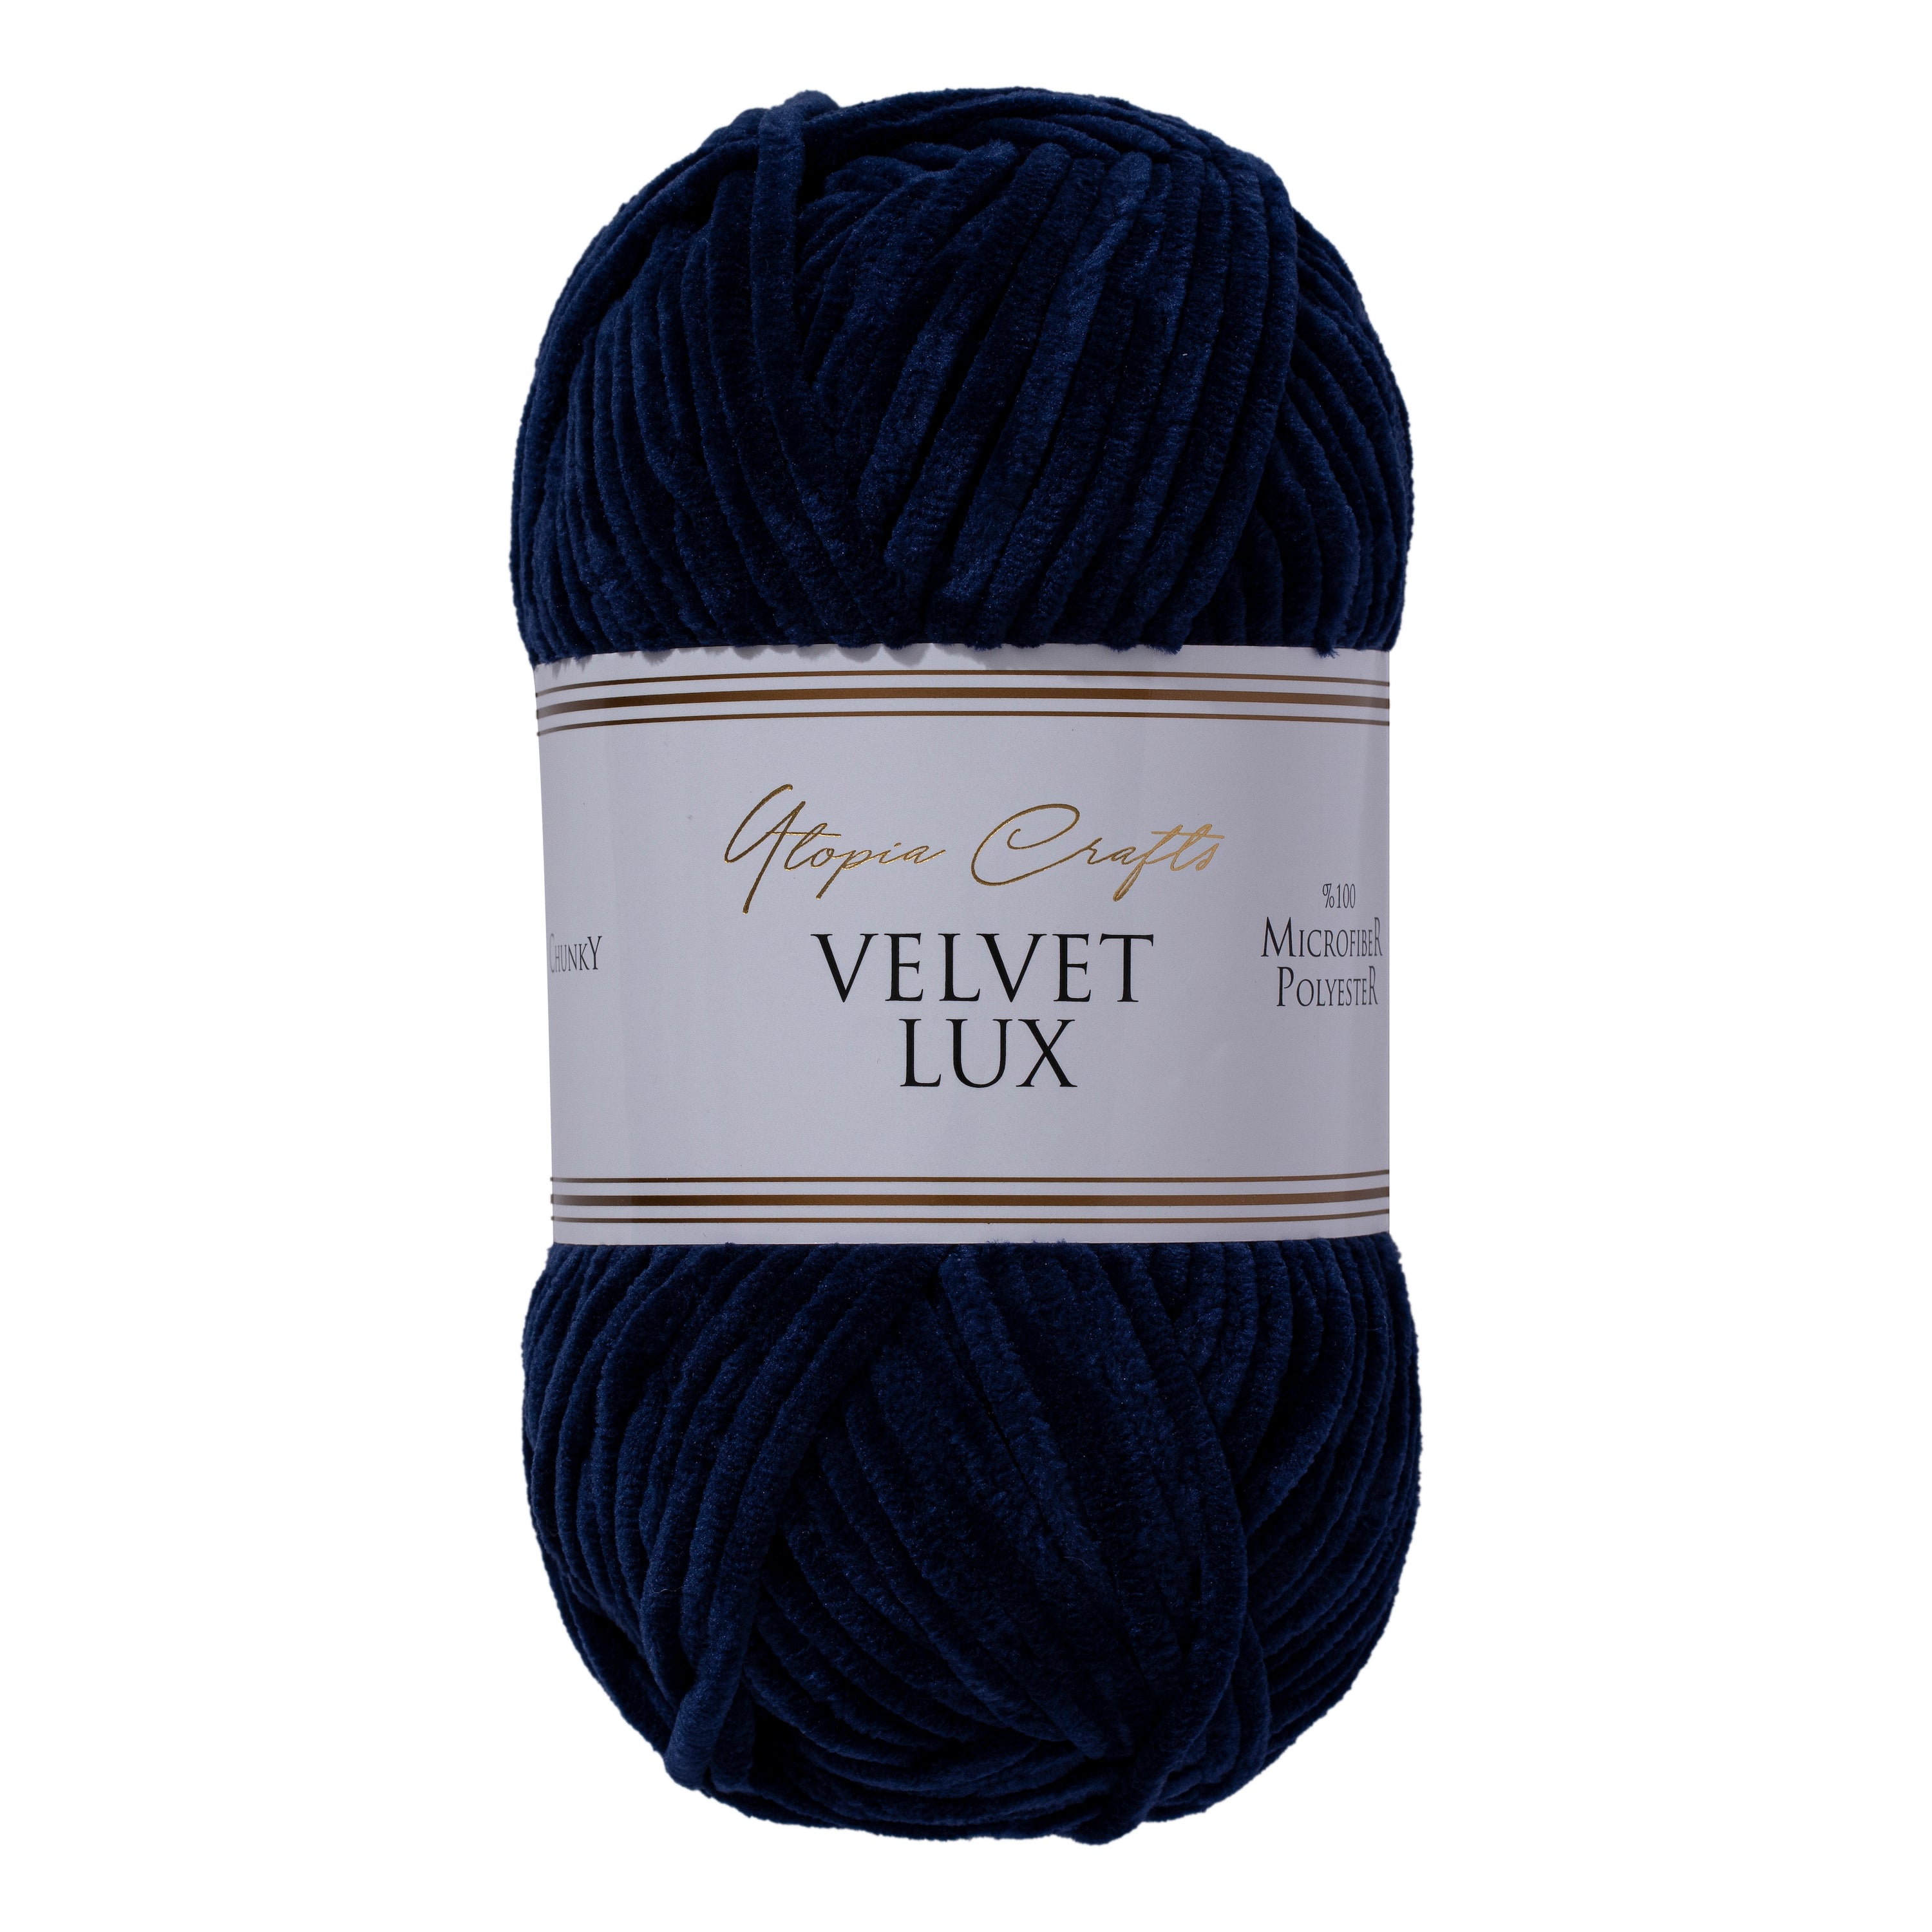 Utopia Crafts Velvet Lux Chenille Super Soft Chunky Yarn for Knitting and Crochet, 100g - 110m (Midnight Blue)